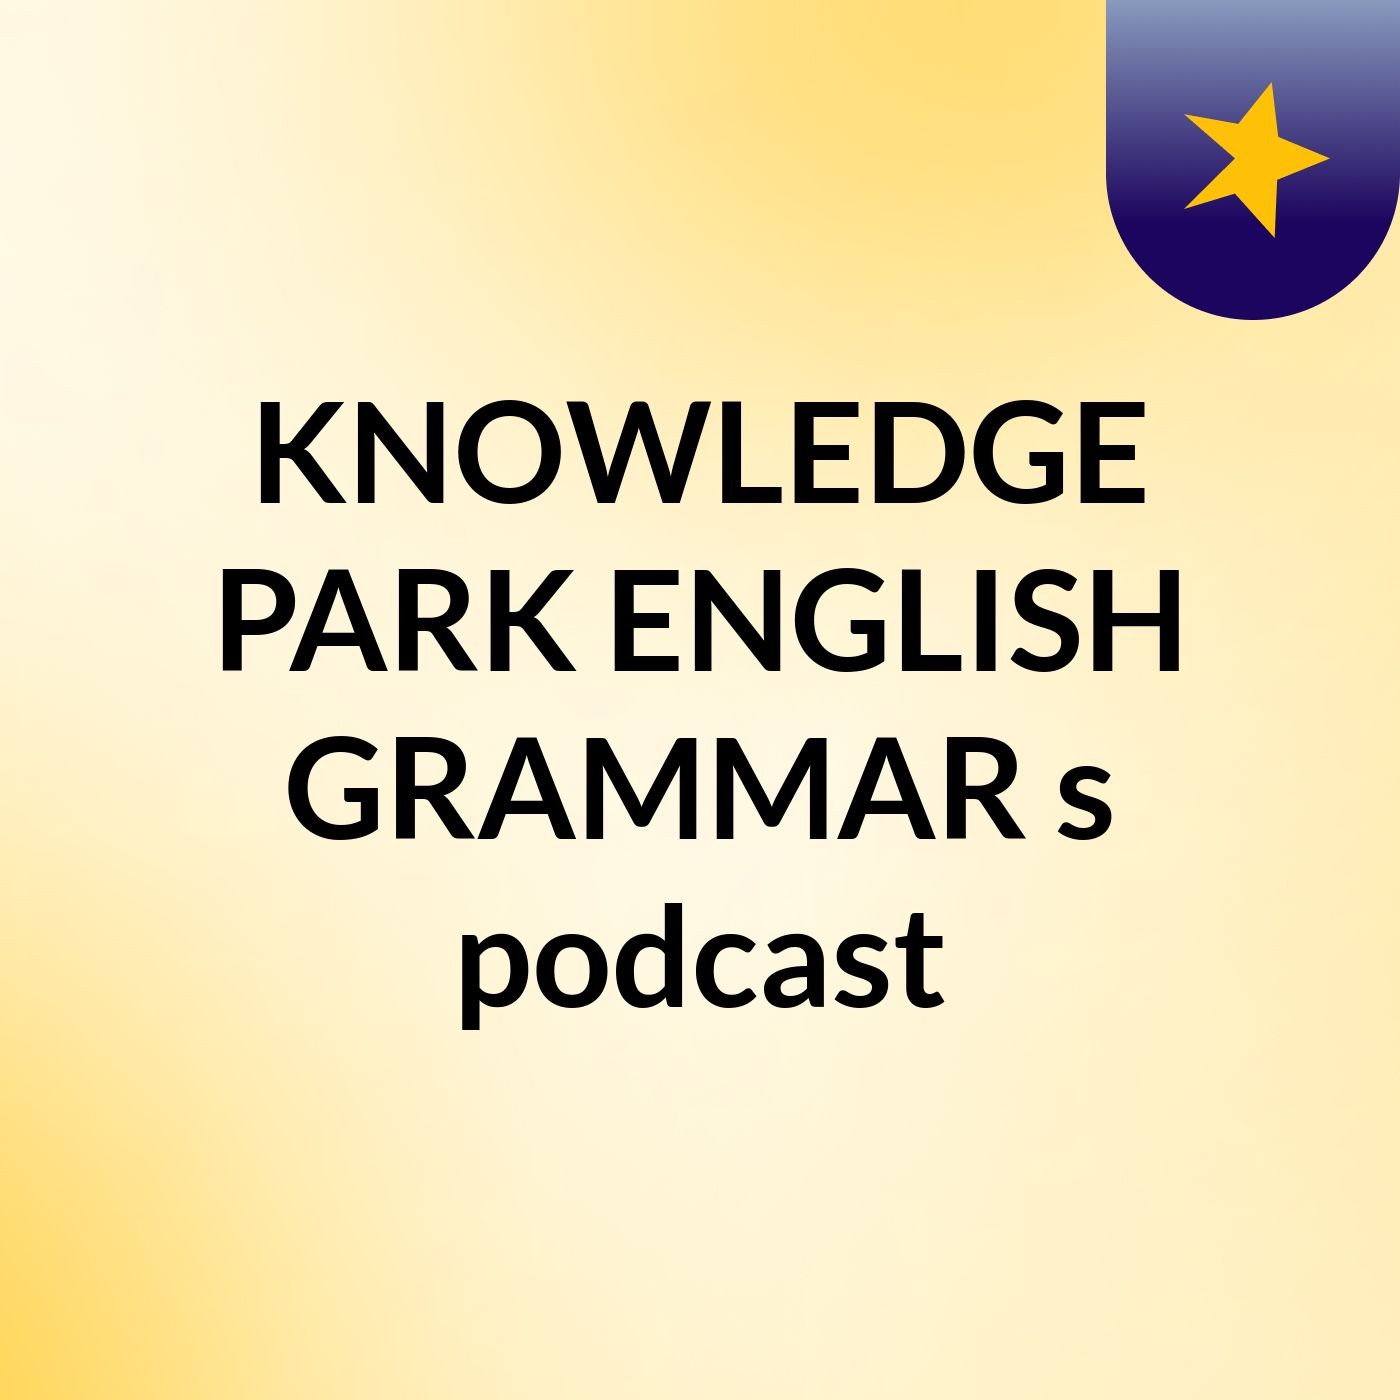 Episode 3 - KNOWLEDGE PARK ENGLISH GRAMMAR's podcast